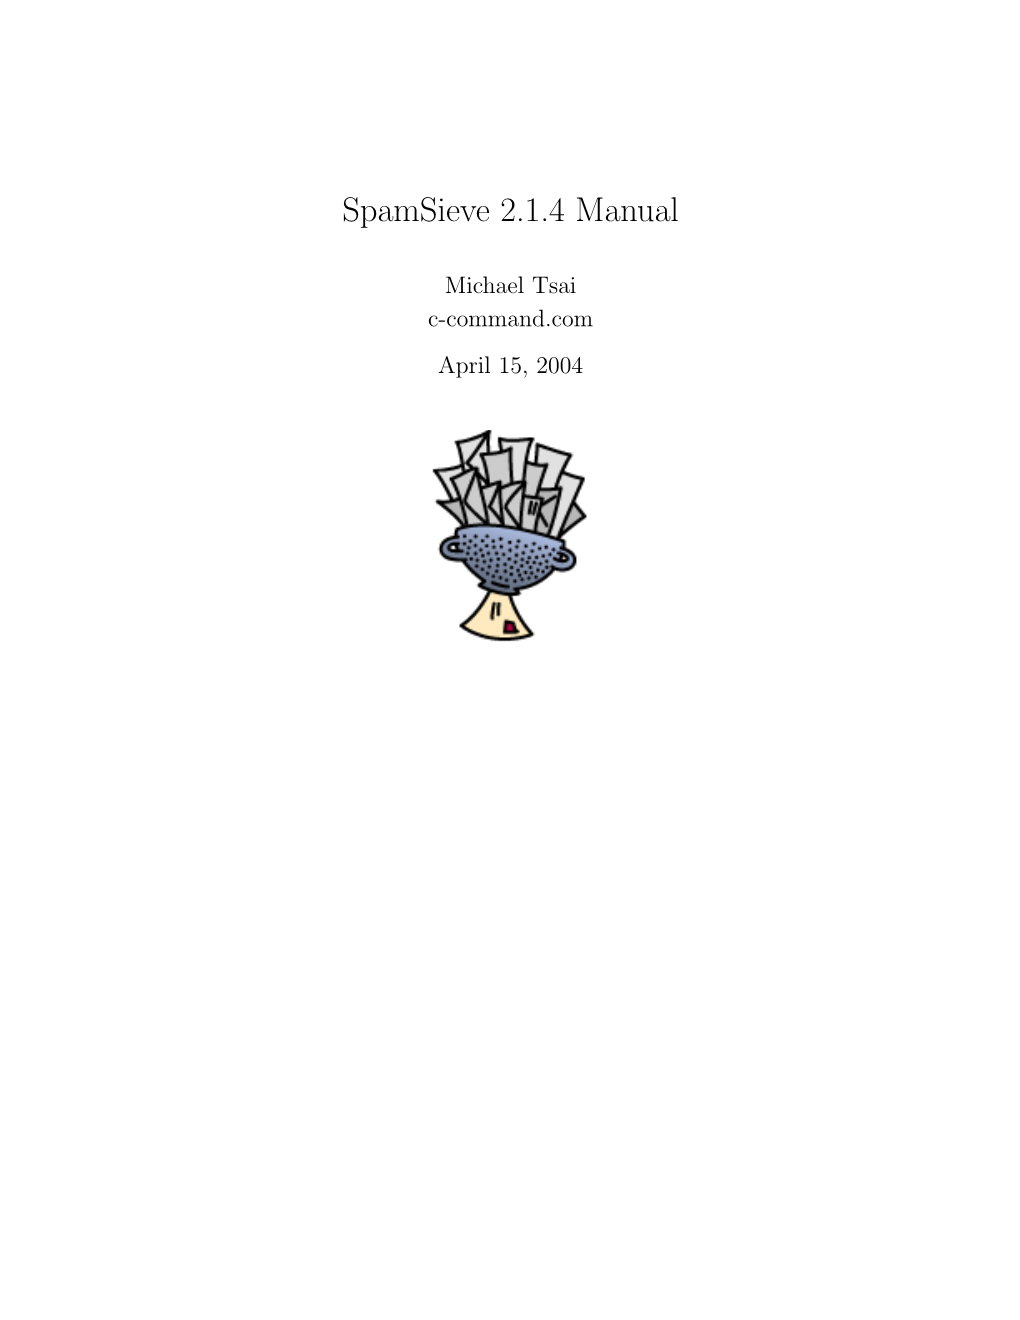 Spamsieve 2.1.4 Manual